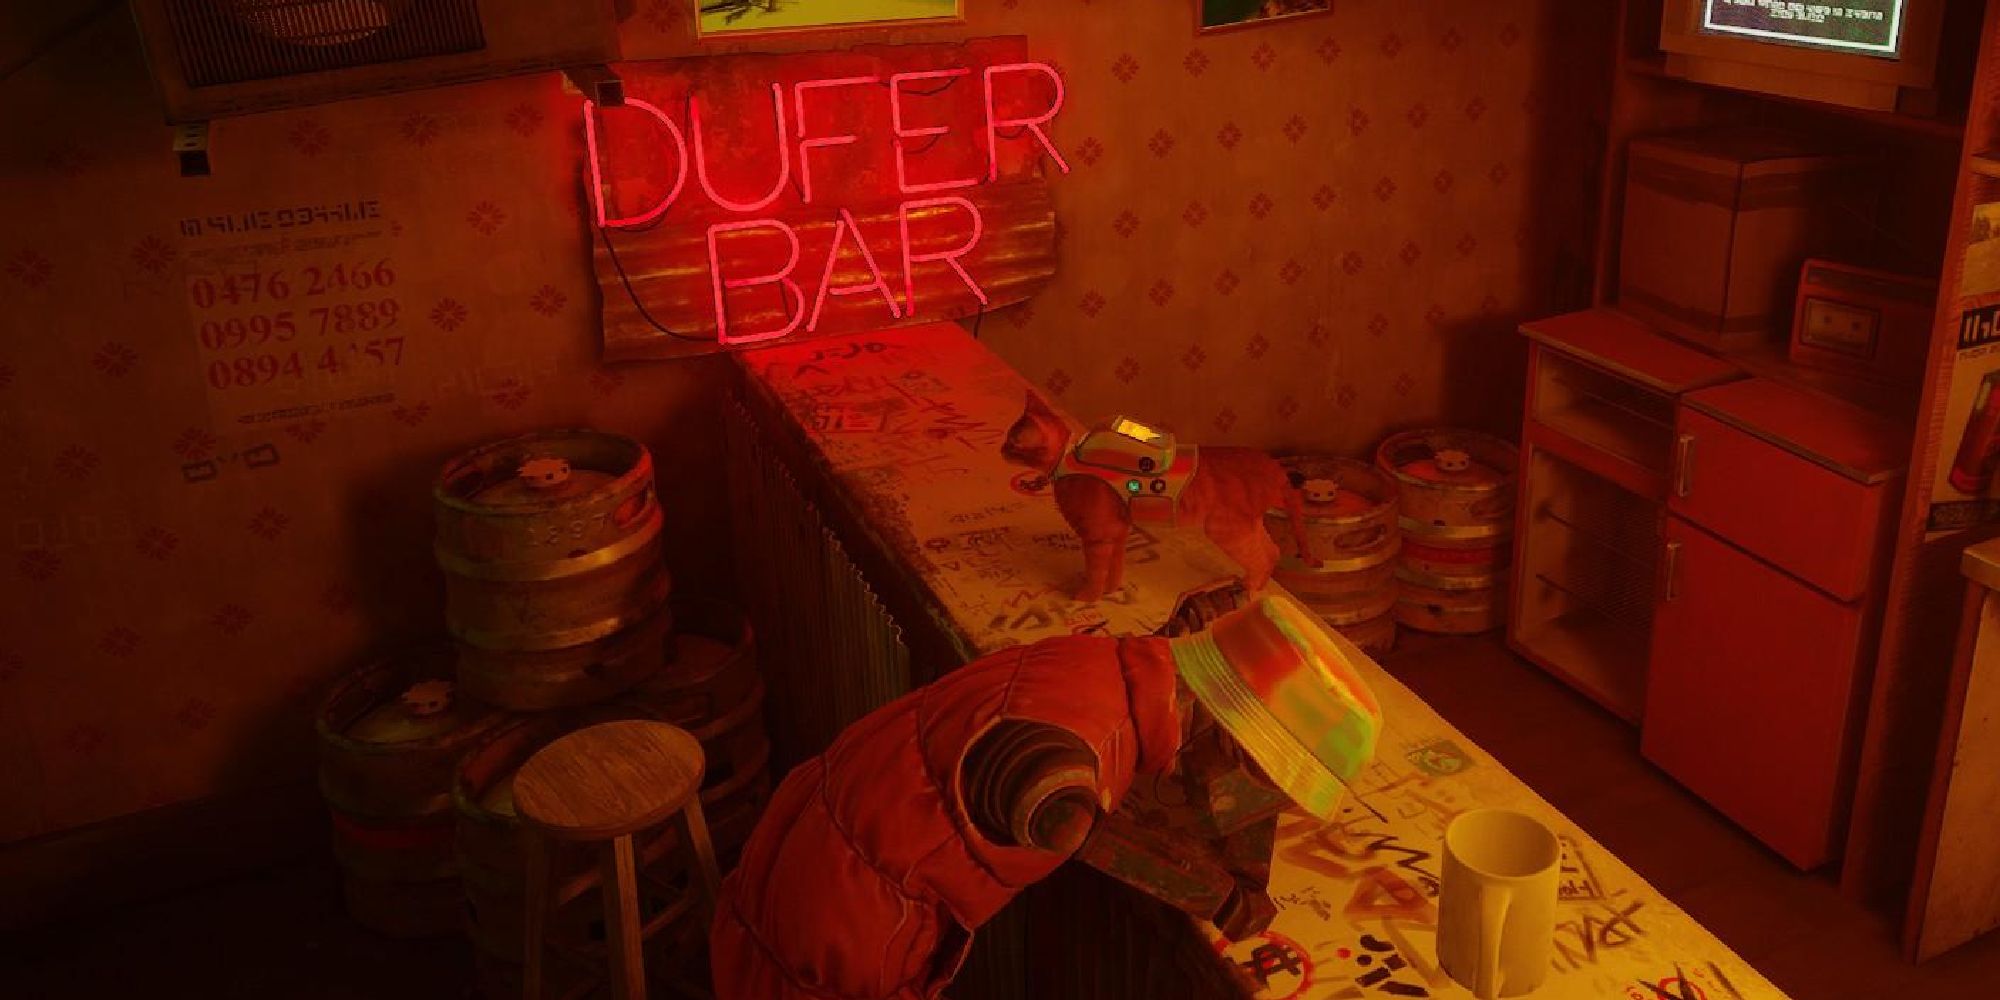 Stray Duffer Bar